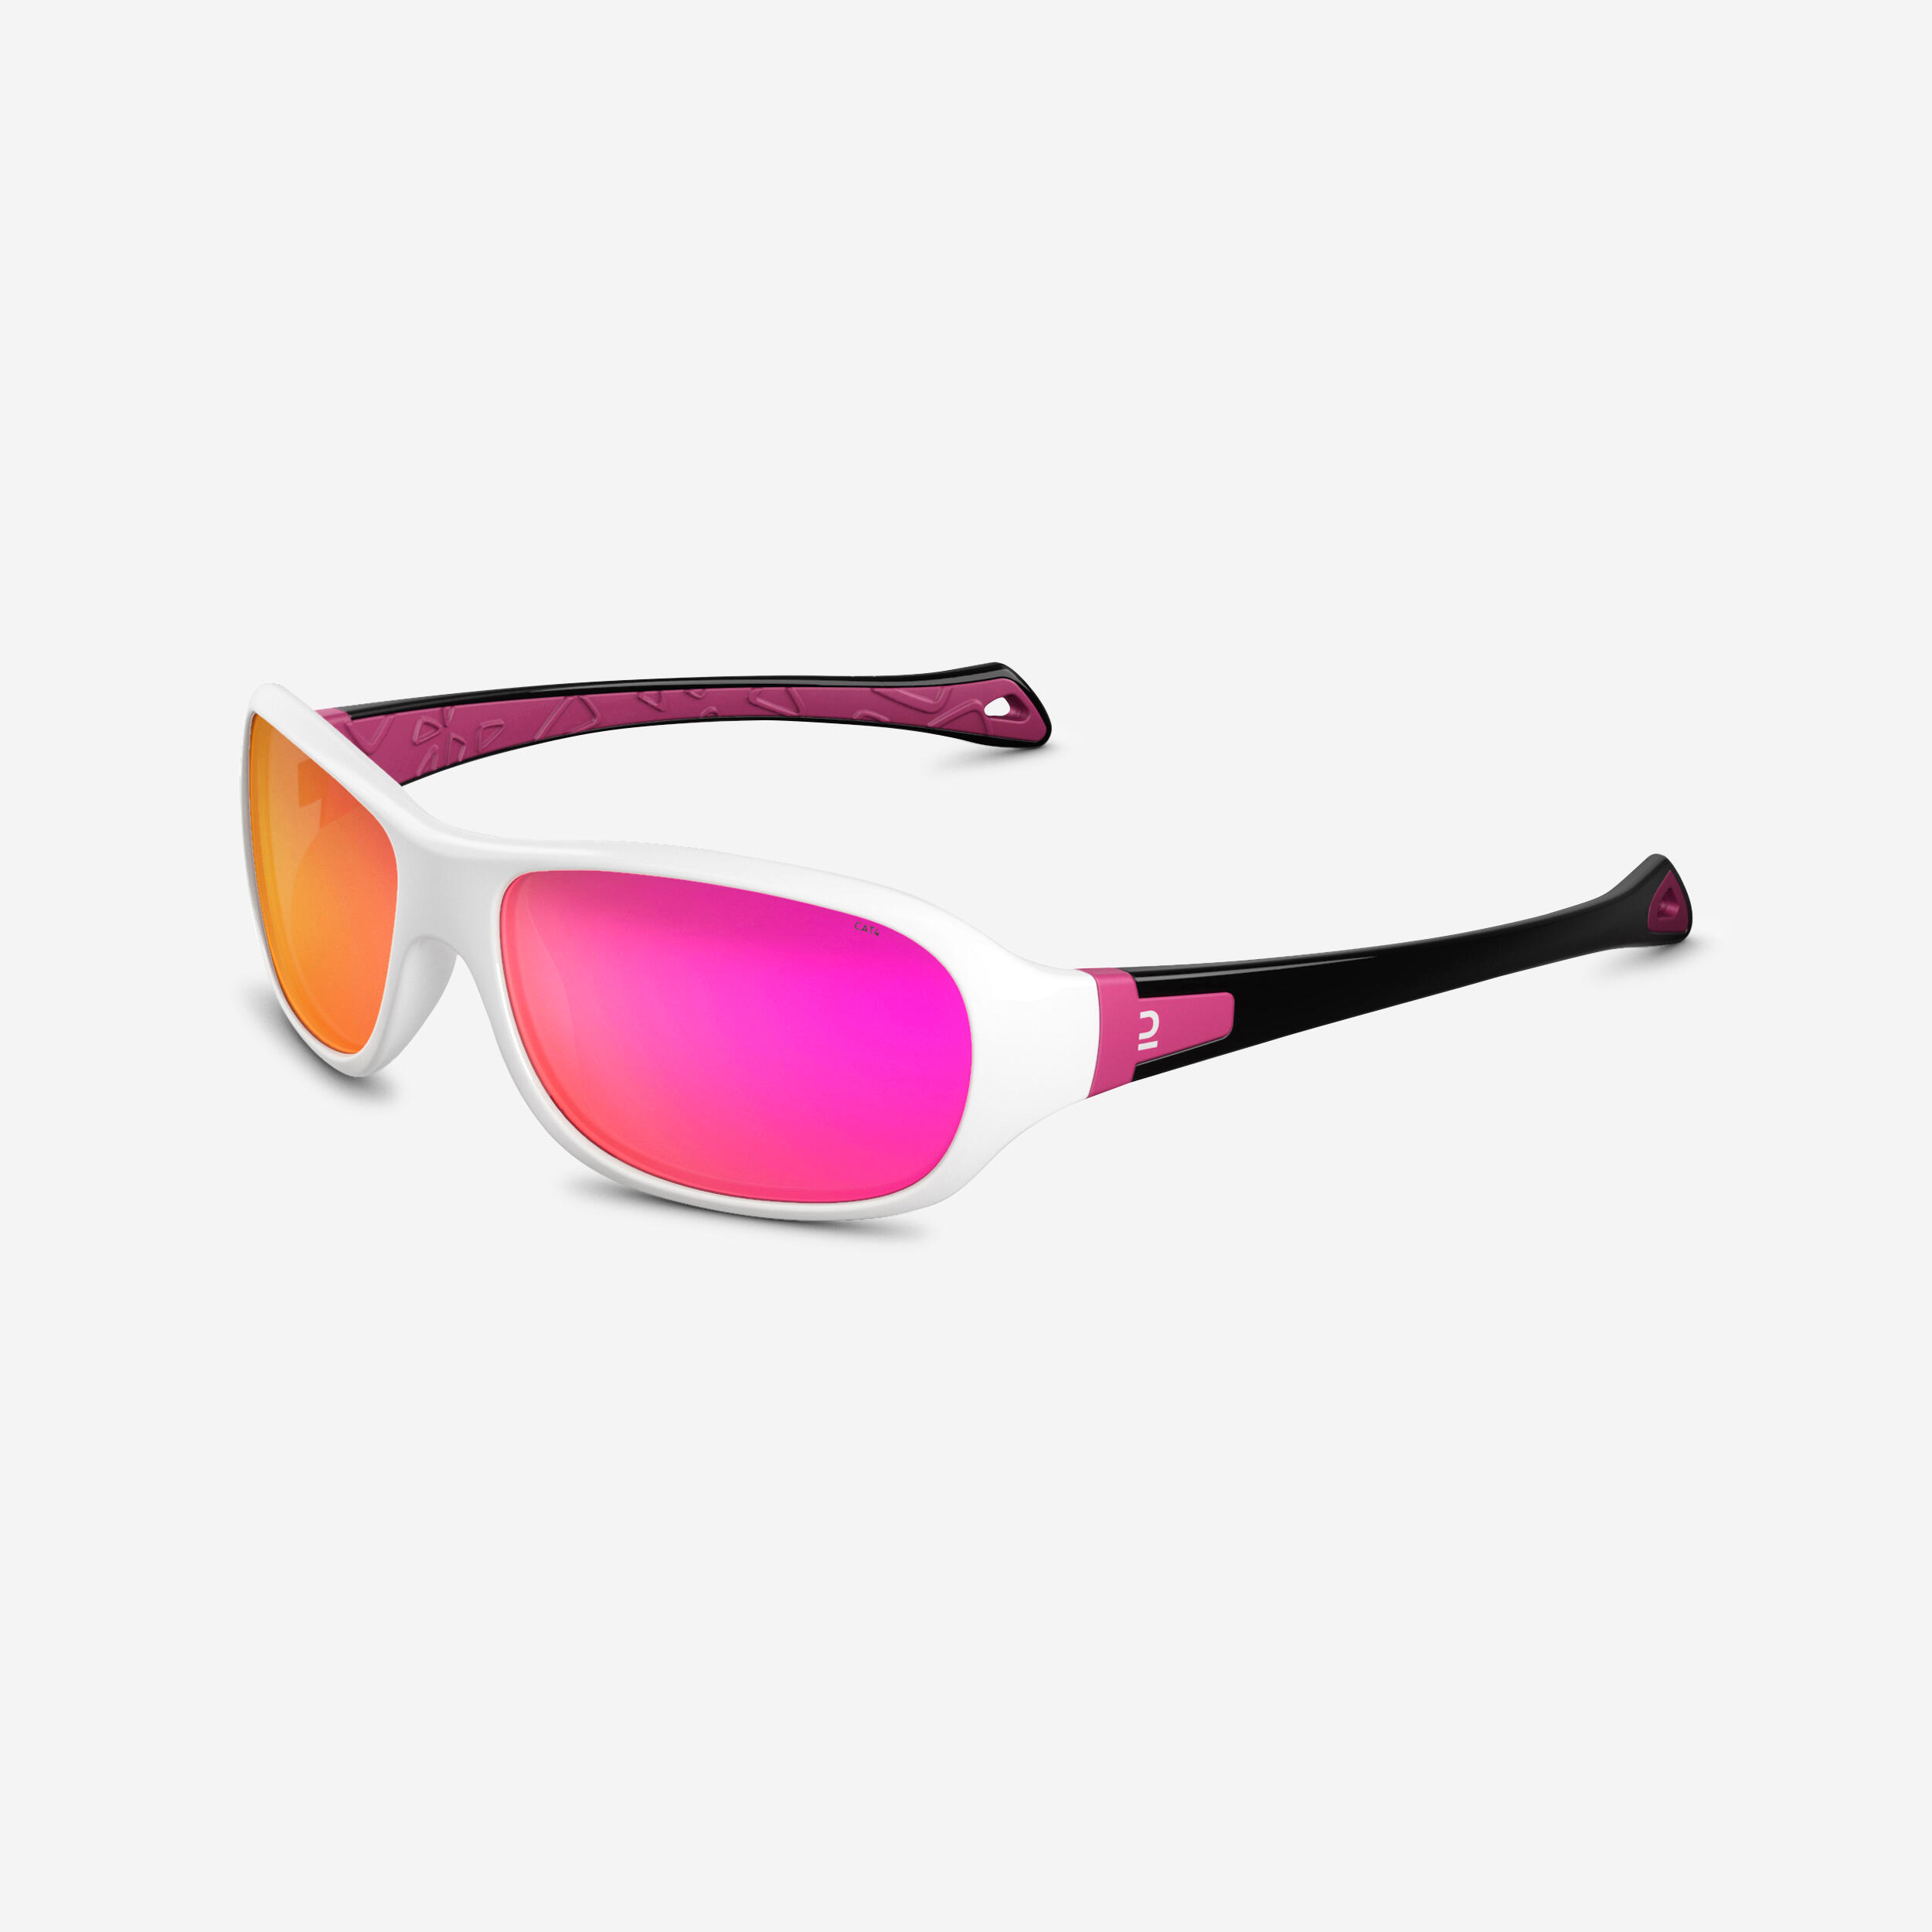 MH T500 Category 4 Hiking Sunglasses - Kids